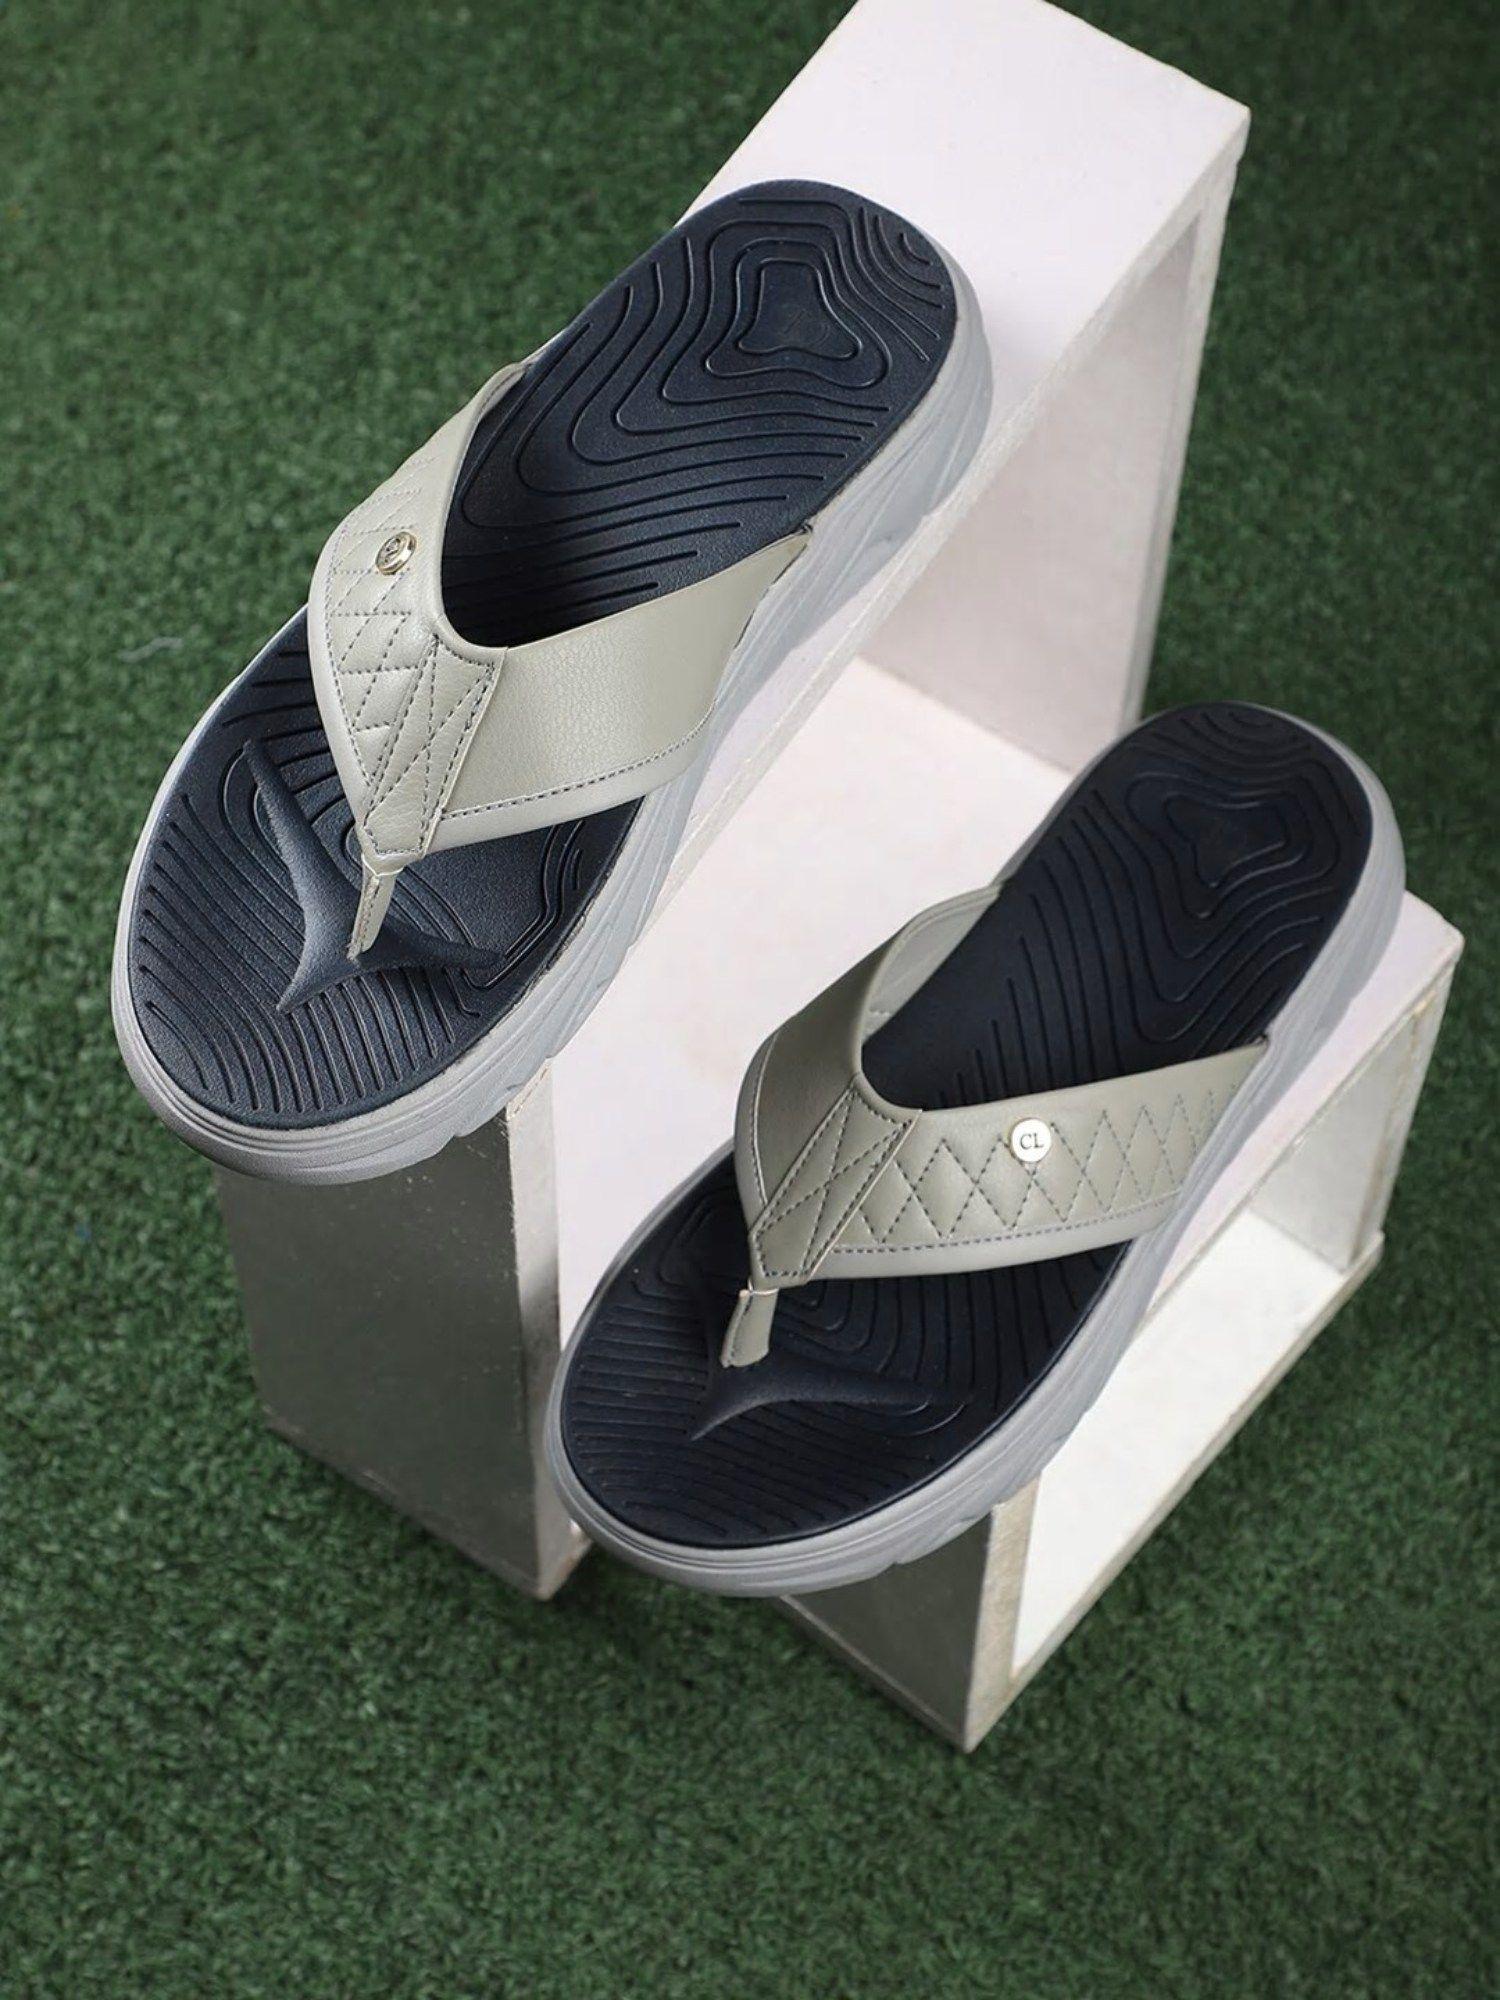 textured grey sandals